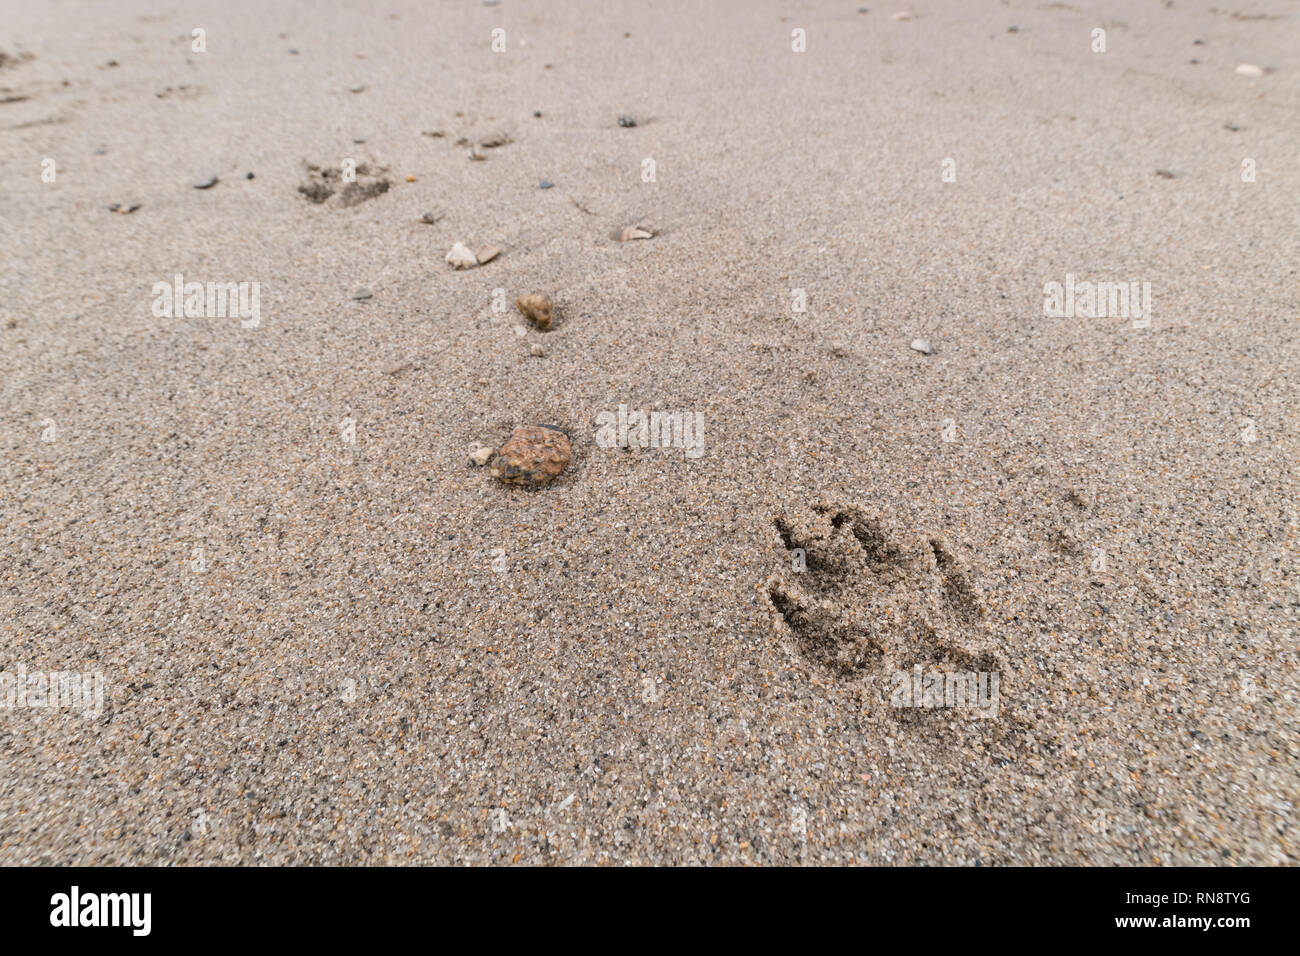 Dog paw prints on sandy beach. Metaphor pet ownership, dog ownership. Stock Photo